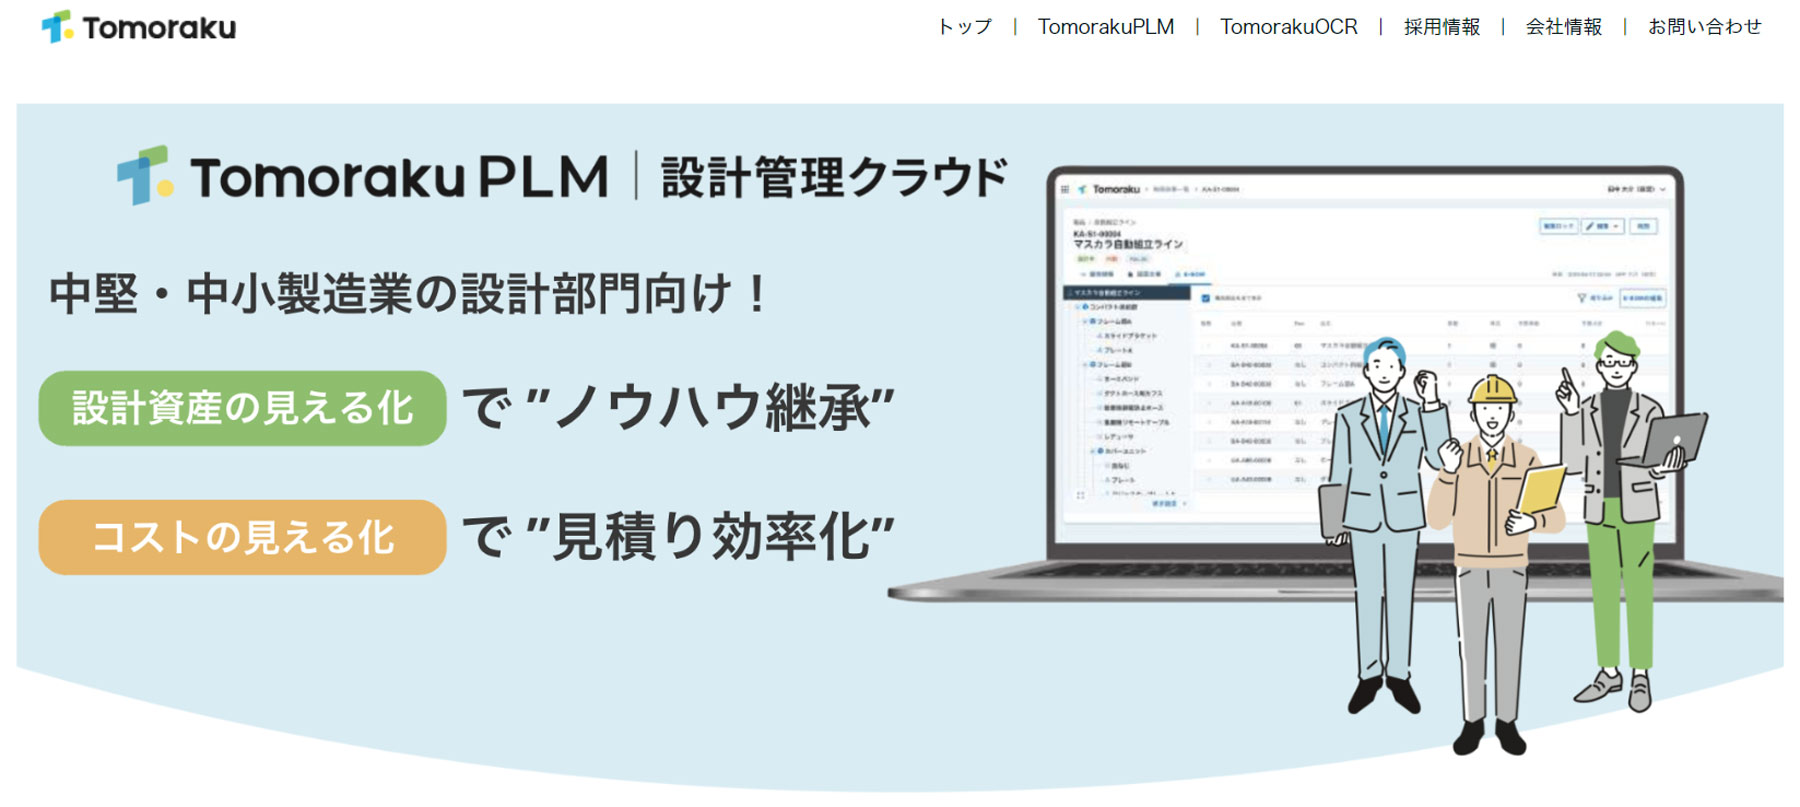 Tomoraku PLM公式Webサイト